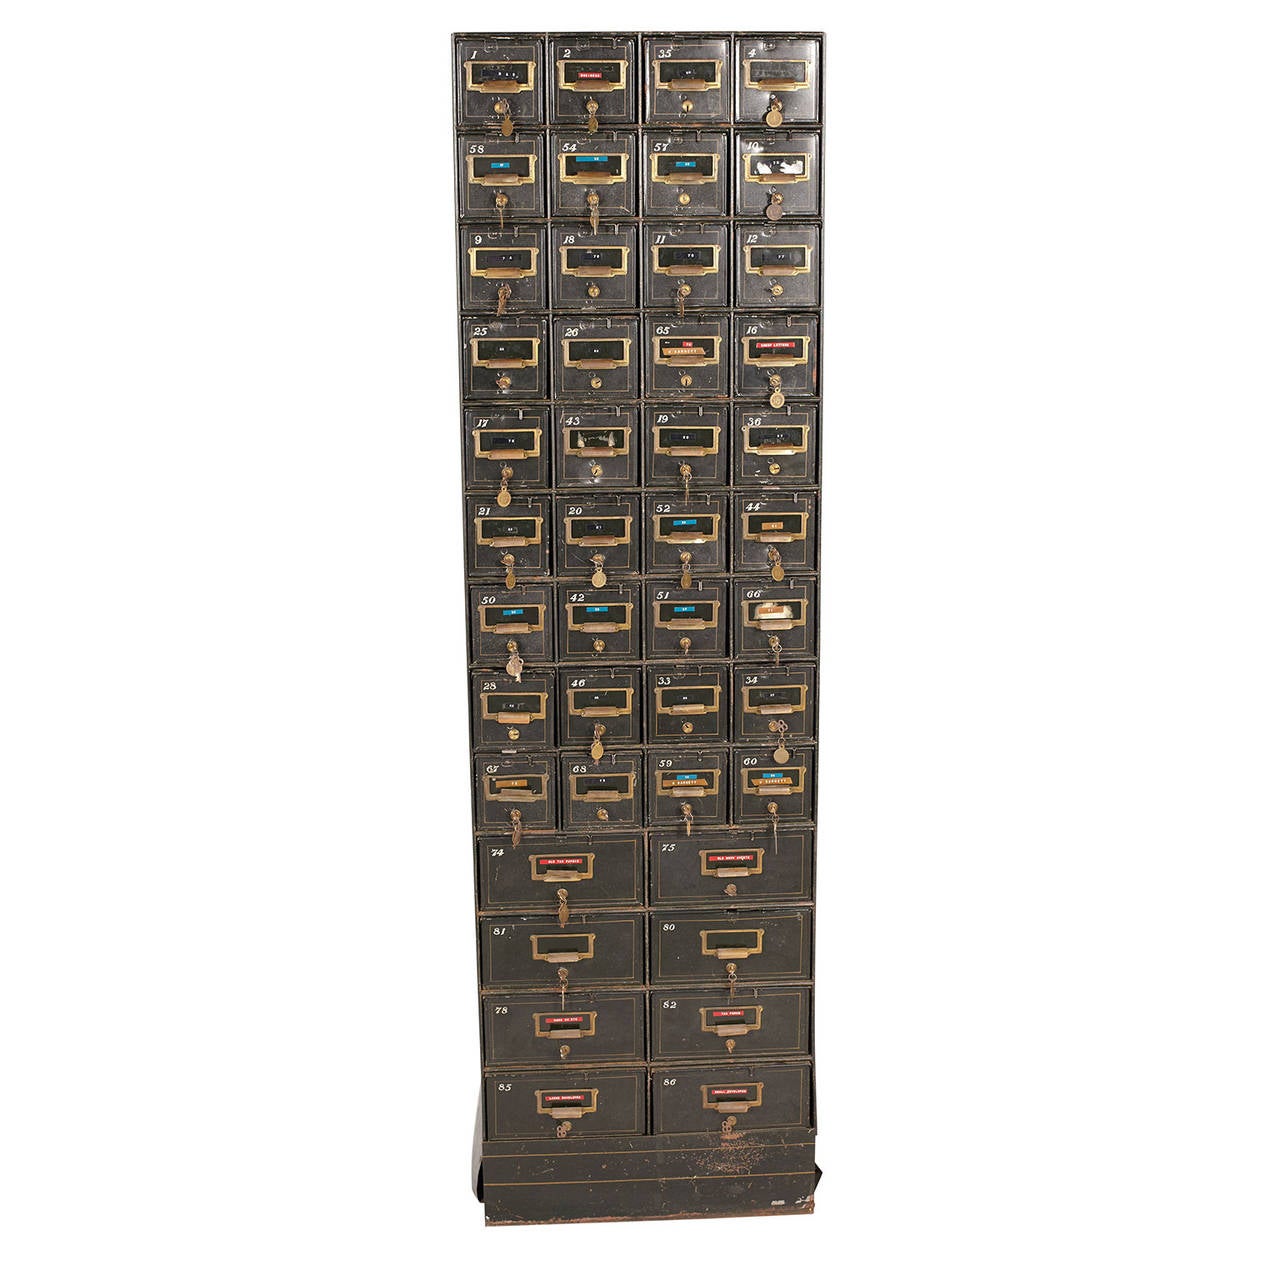 Vintage black metal standing safety deposit box section. Most drawers come with original keys. 
*some keys missing